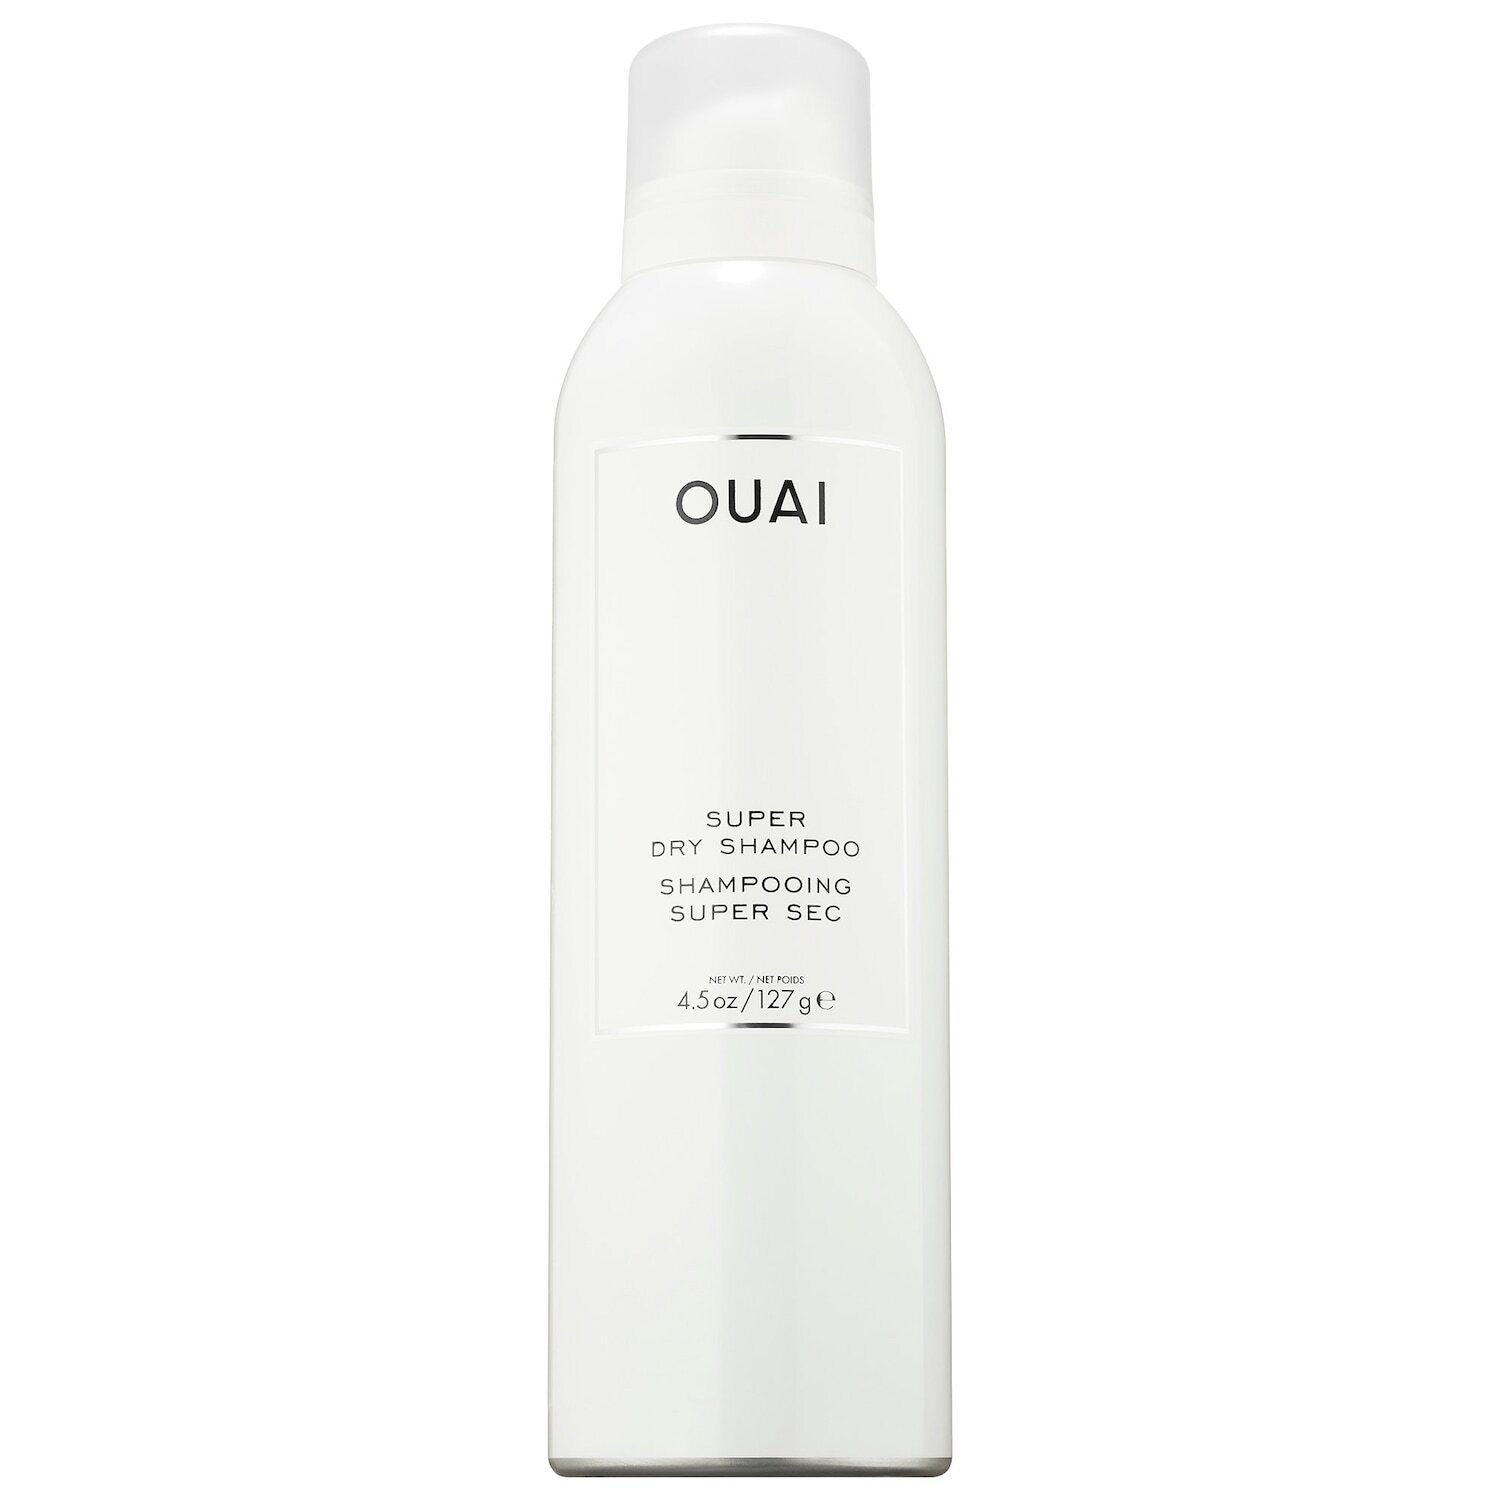 Super Dry Shampoo - OUAI 